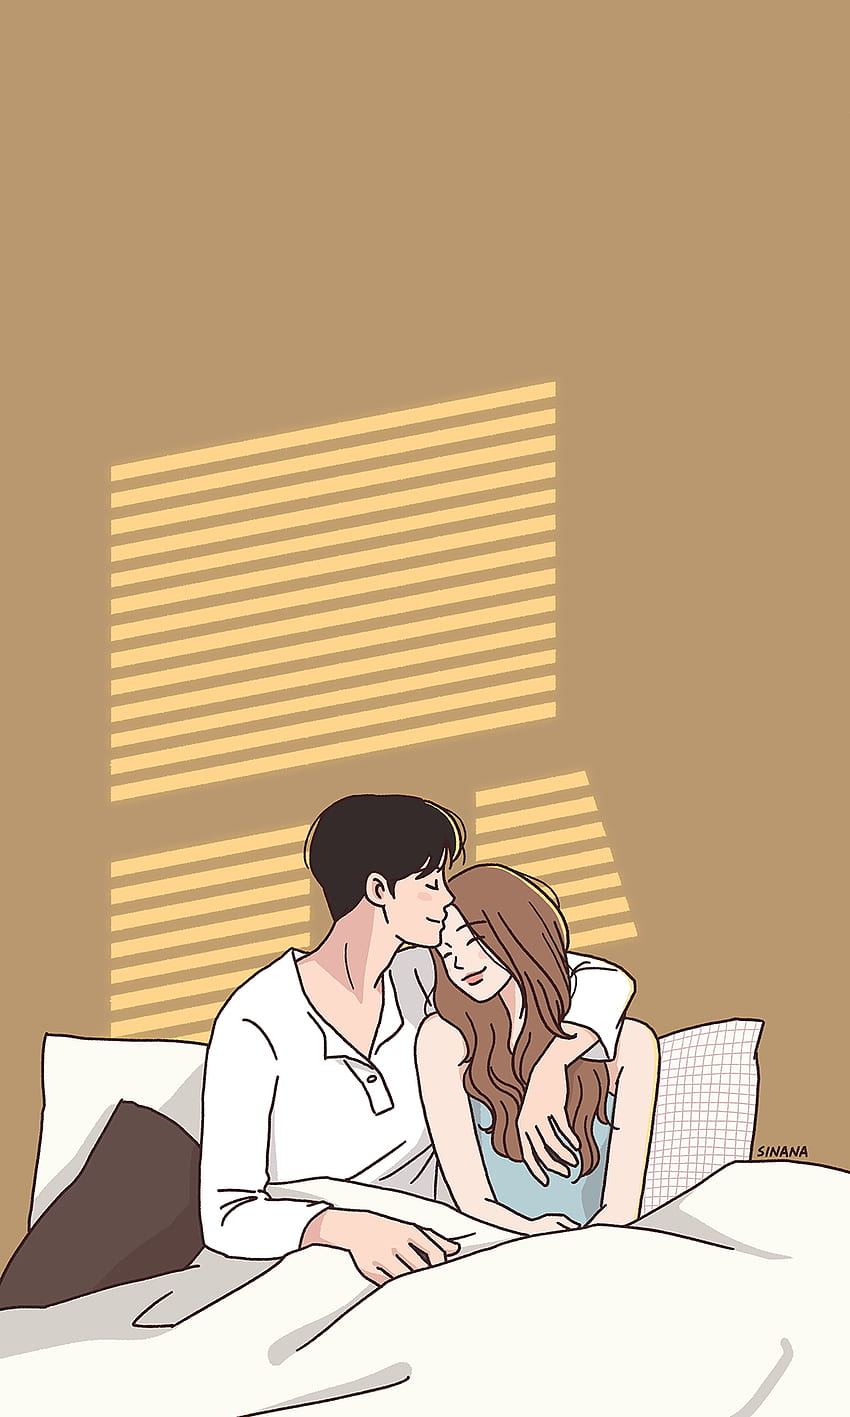 Couple sketch on Pinterest